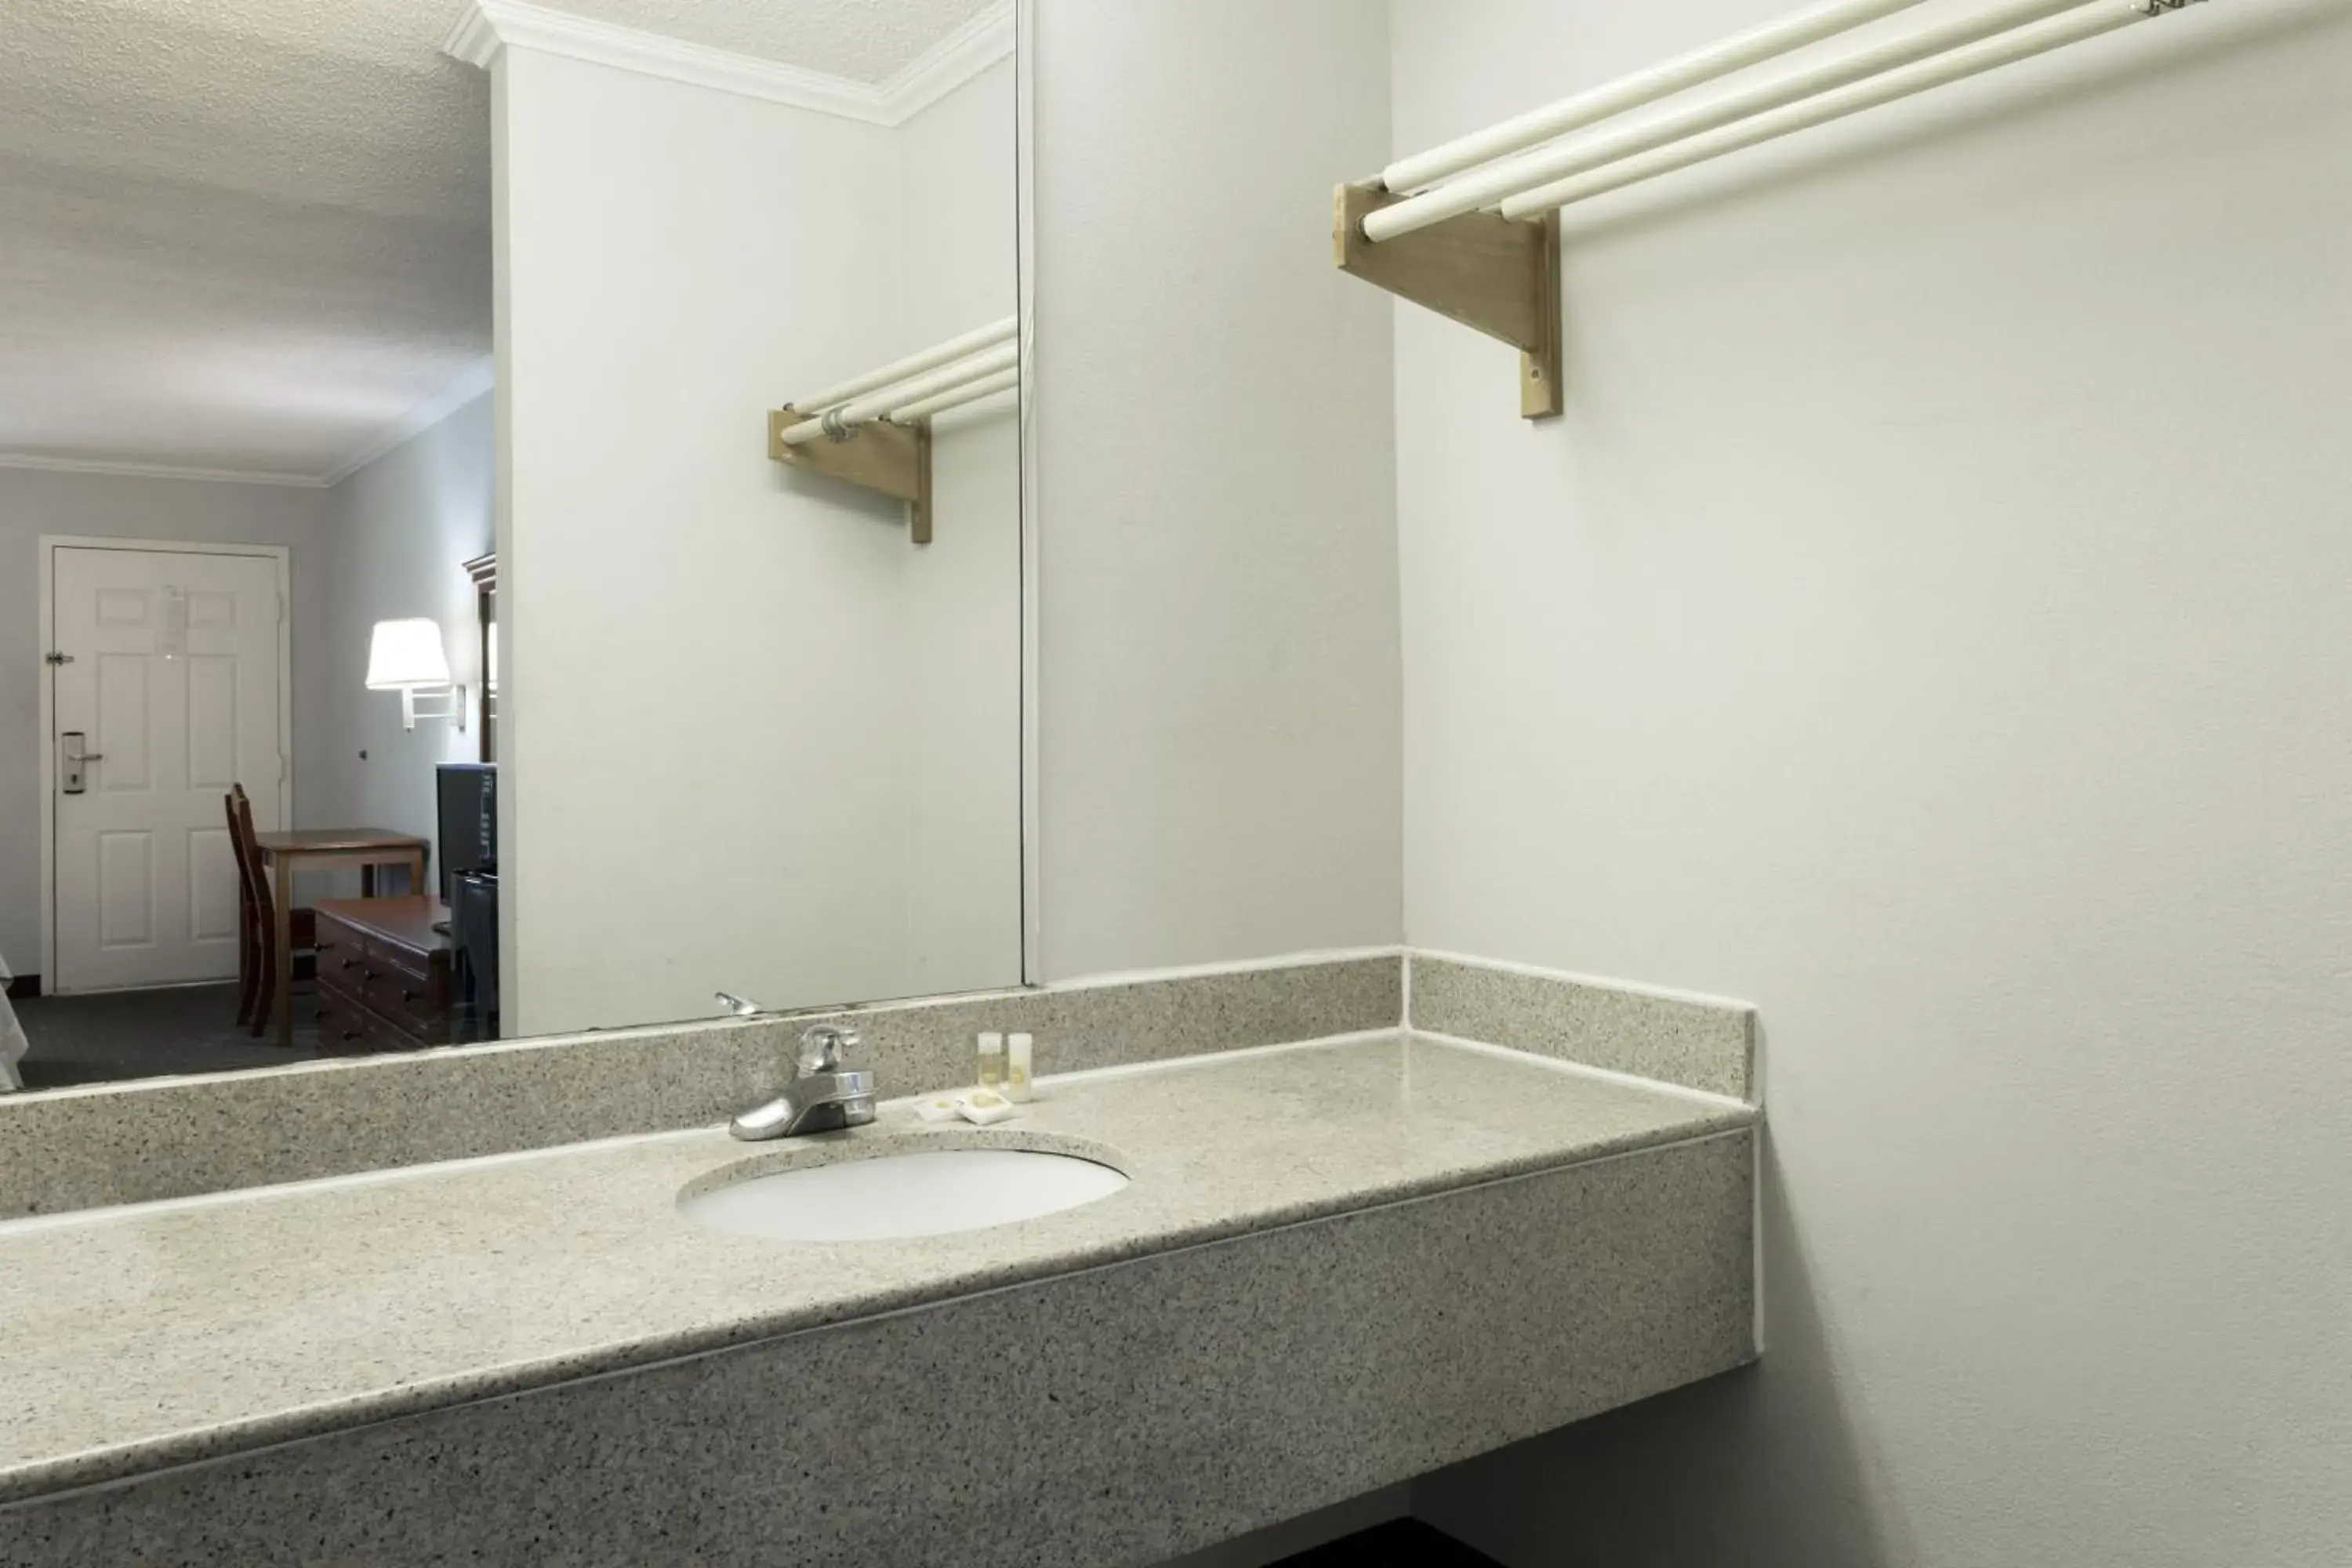 Area and facilities, Bathroom in Days Inn by Wyndham Clinton